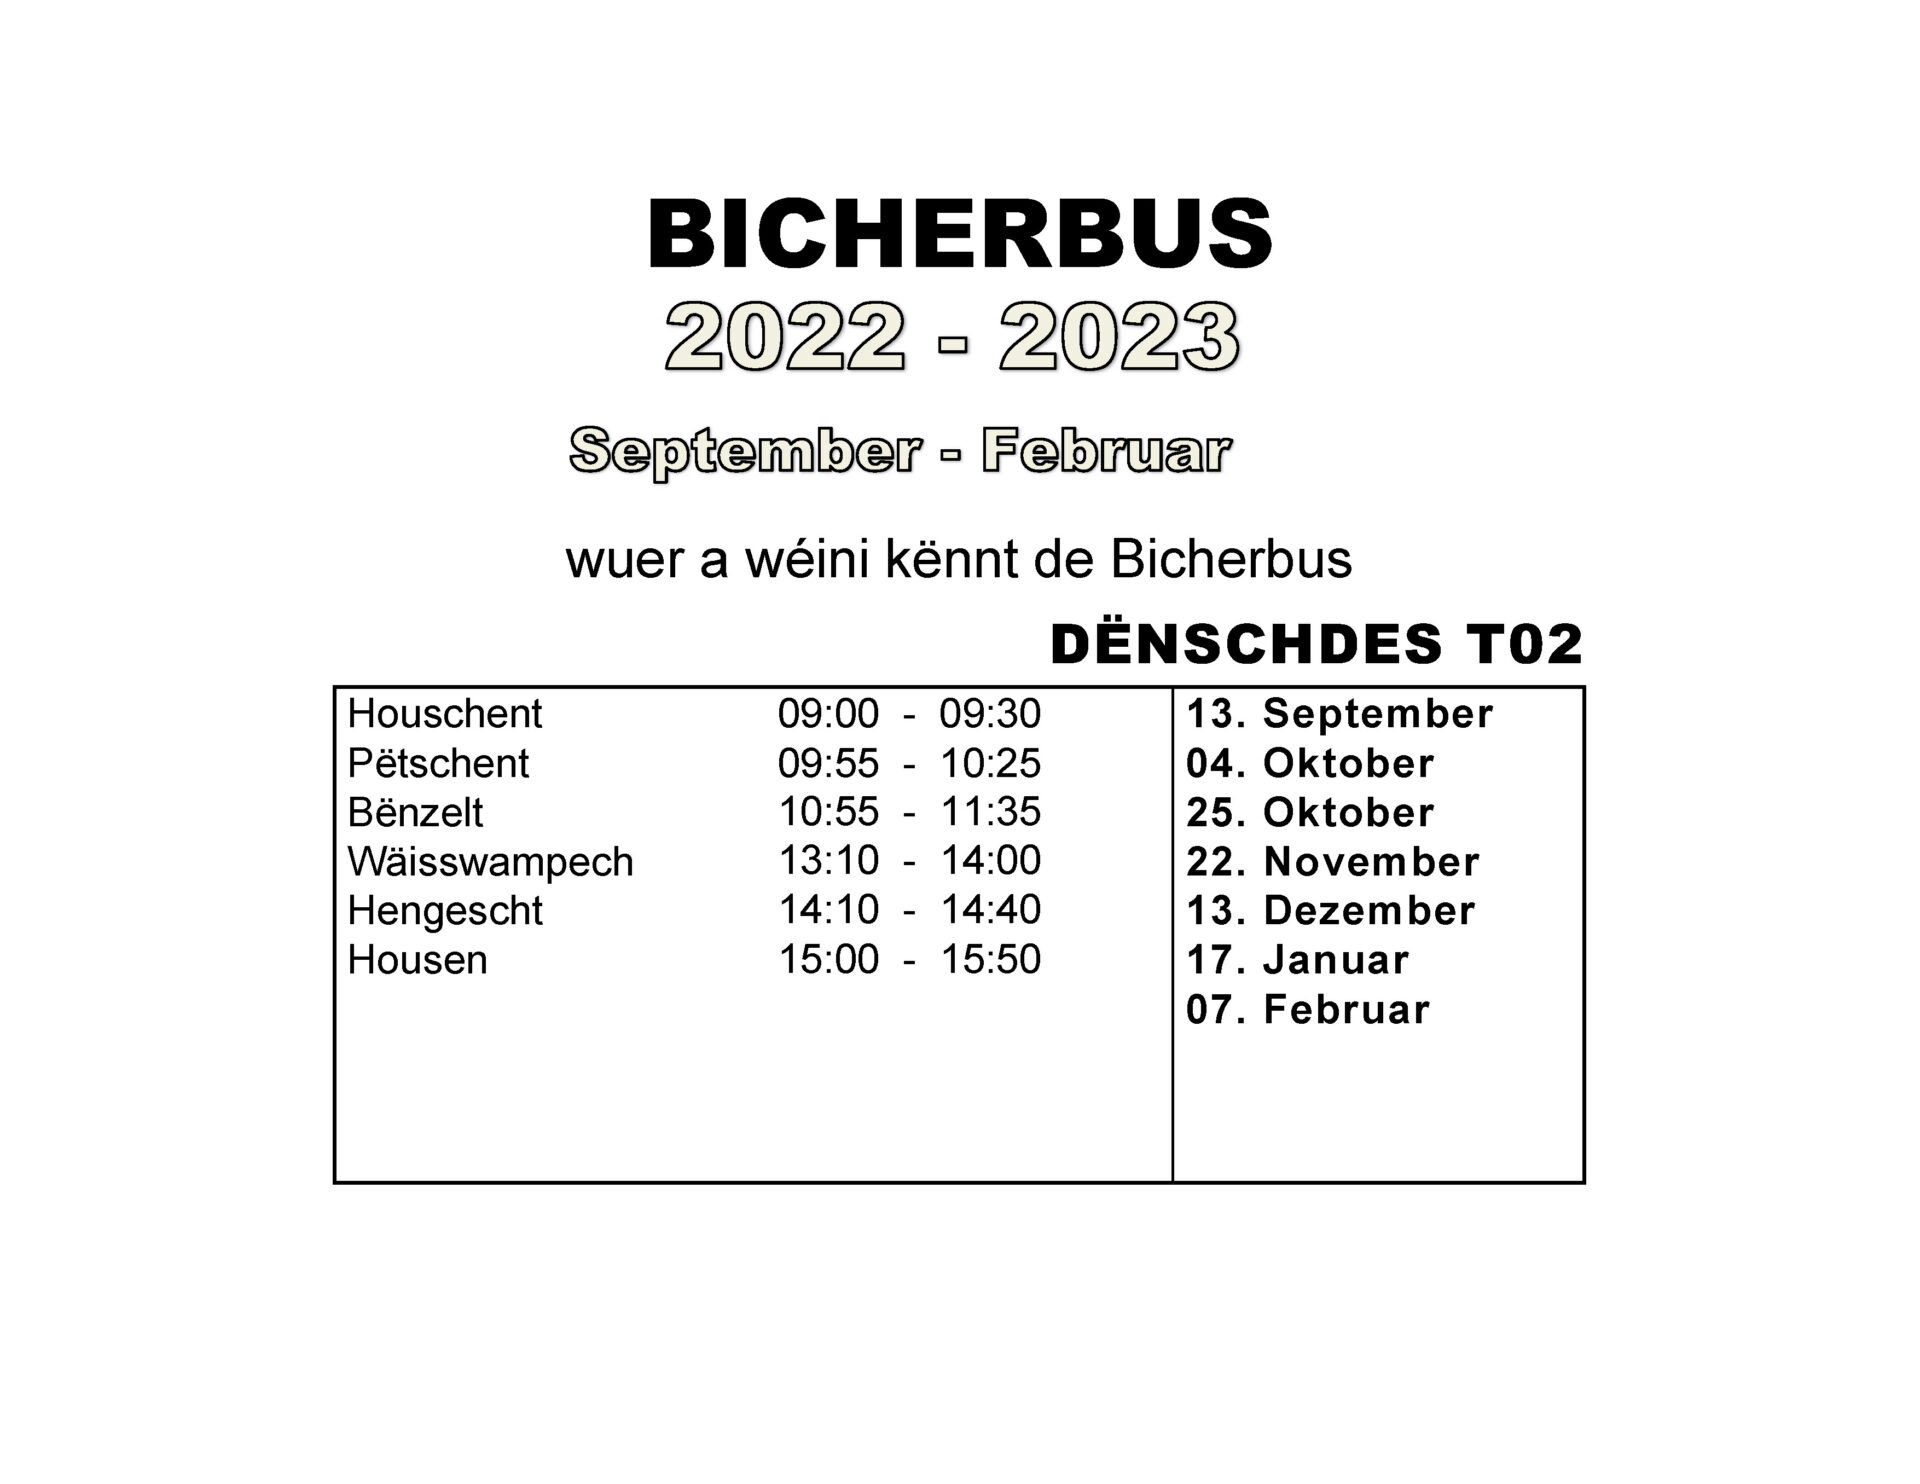 Bicherbus 2022 - 2023